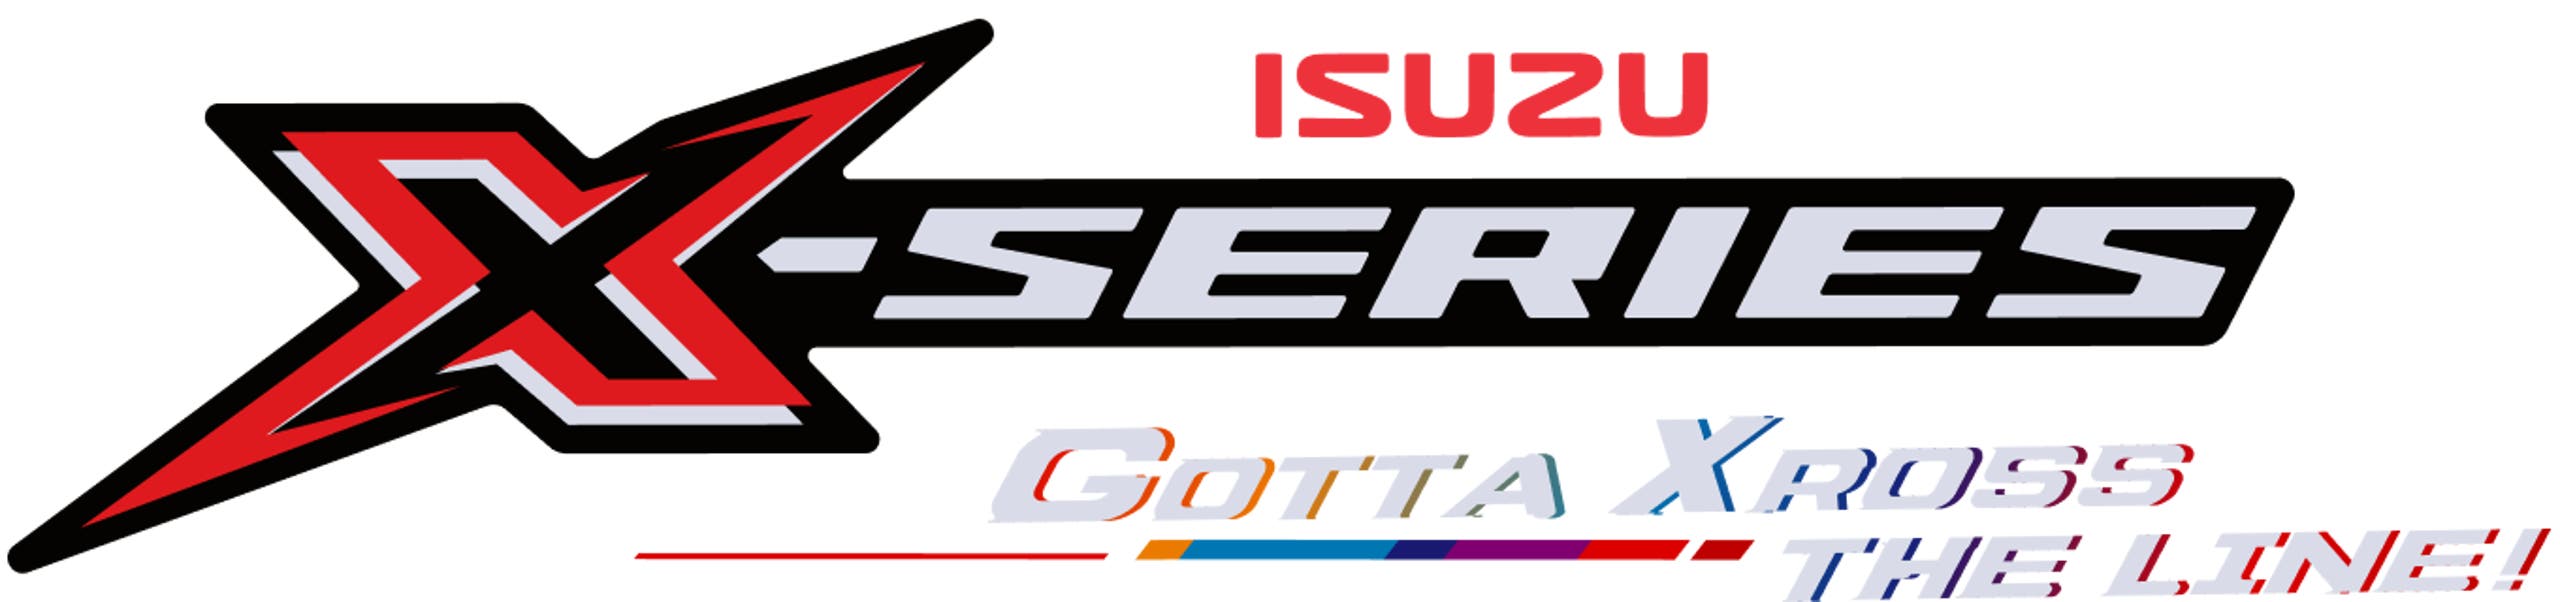 Isuzu X-series Gotta Xross The Line!